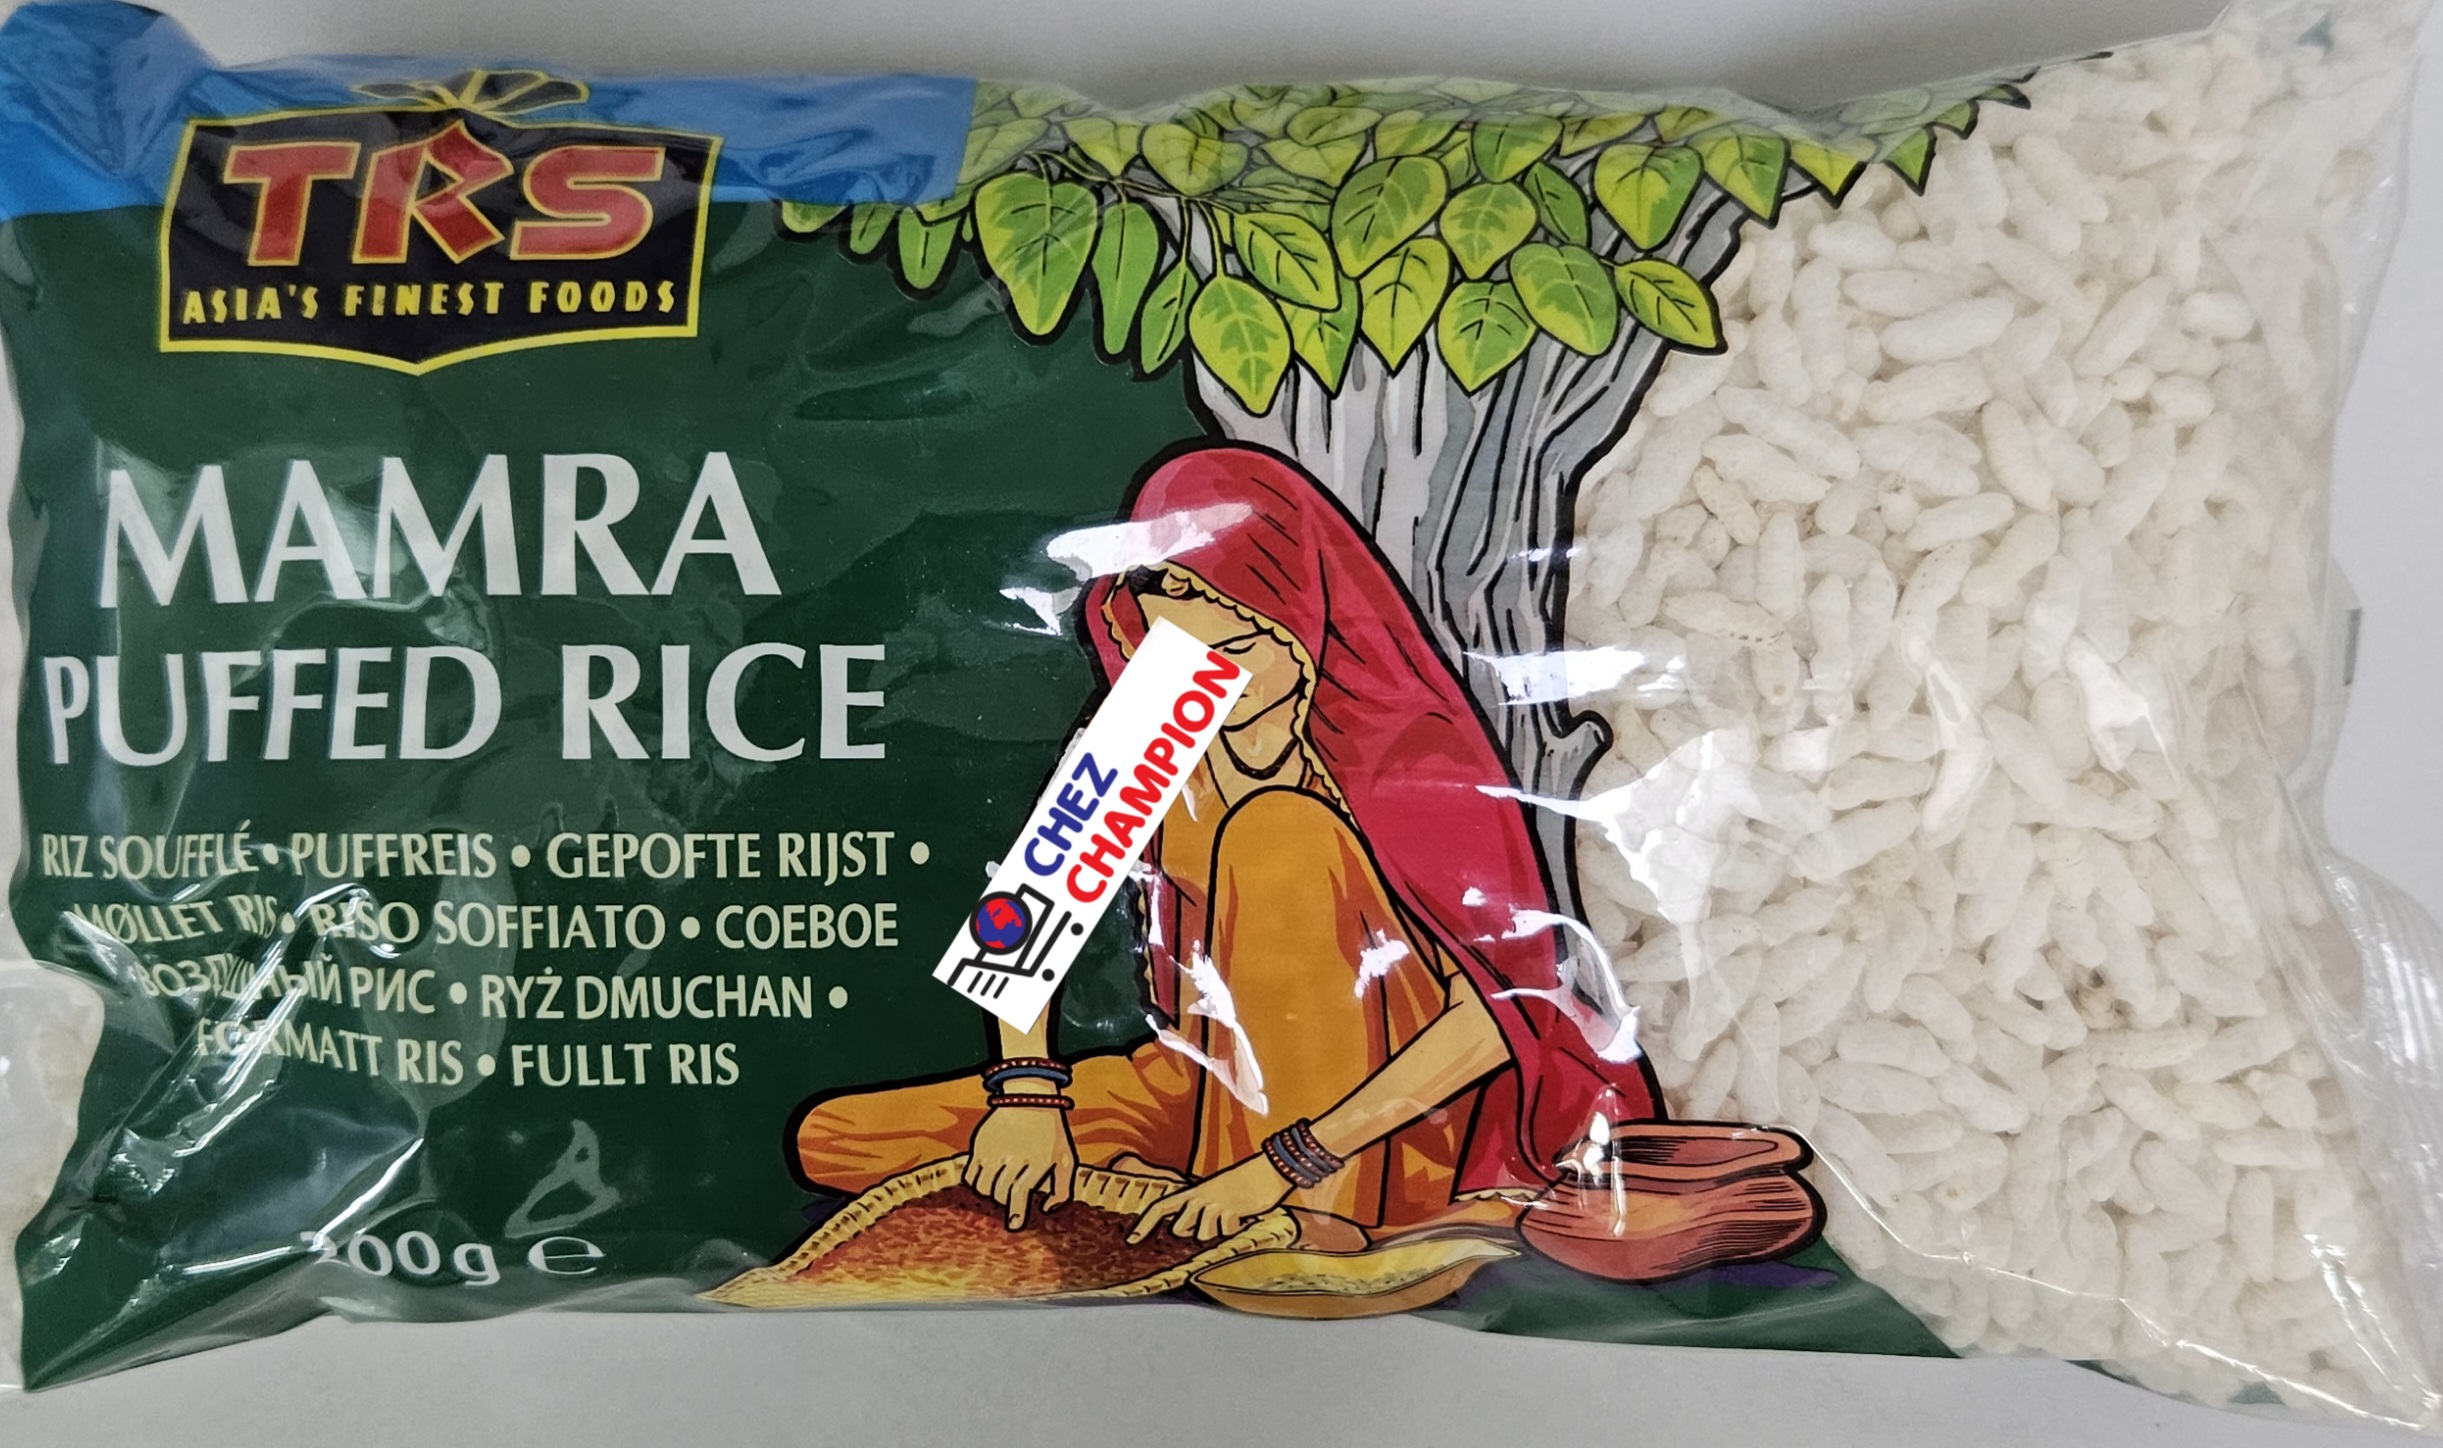 TRS mamra puffed rice – Puffreis – riz soufflé – riso soffiato – 200g